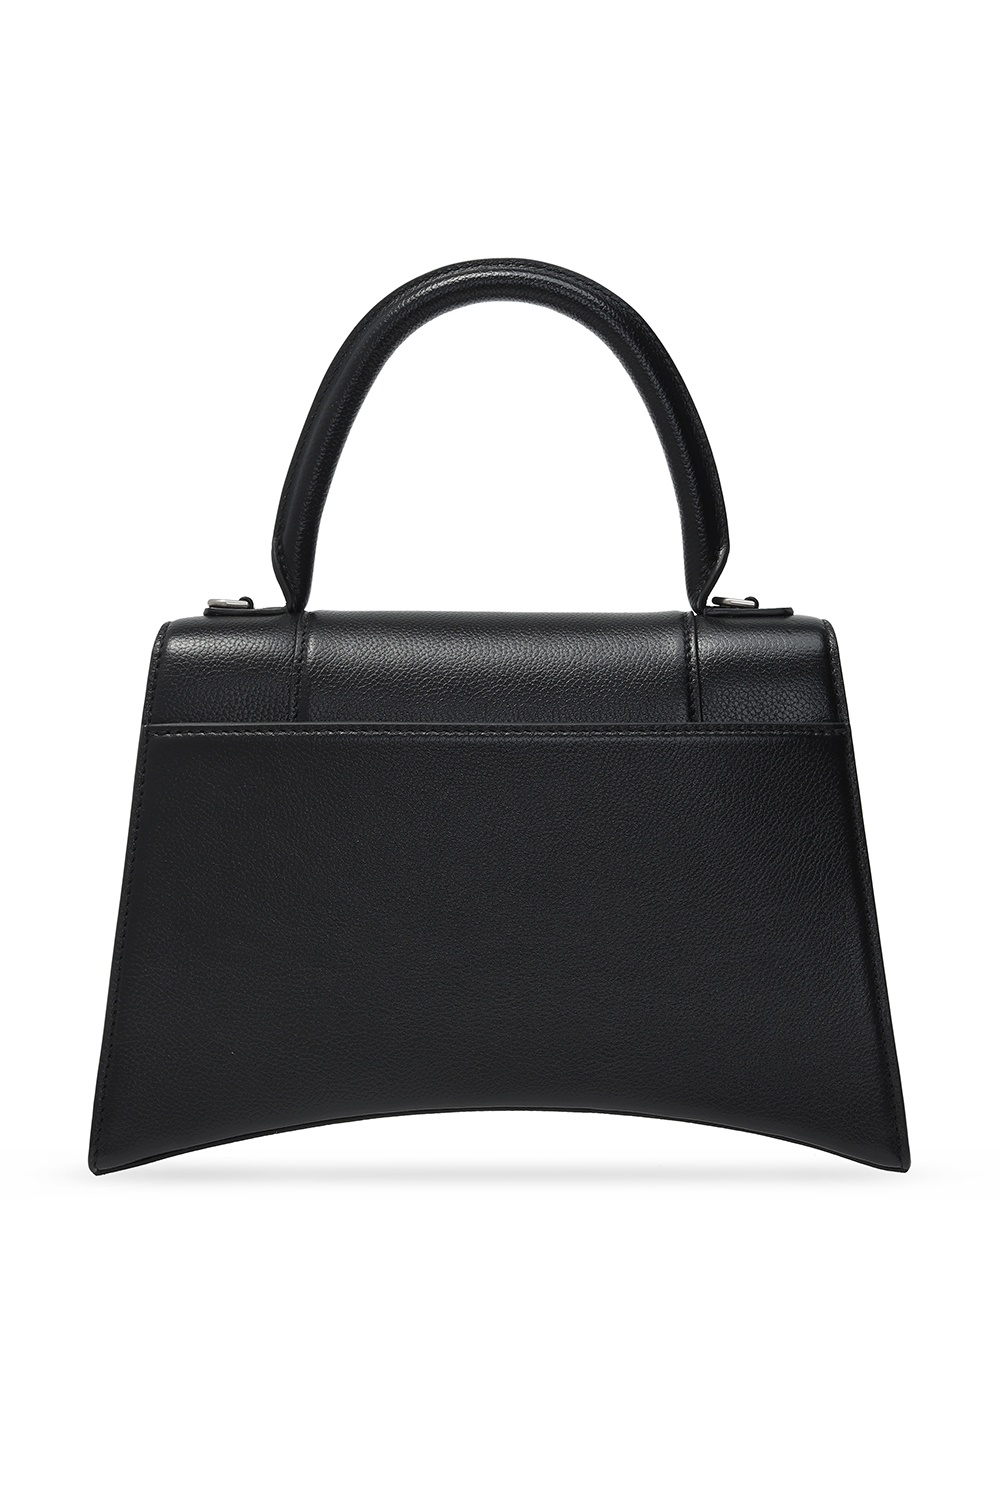 Balenciaga XS Hourglass velvet tote bag - Black